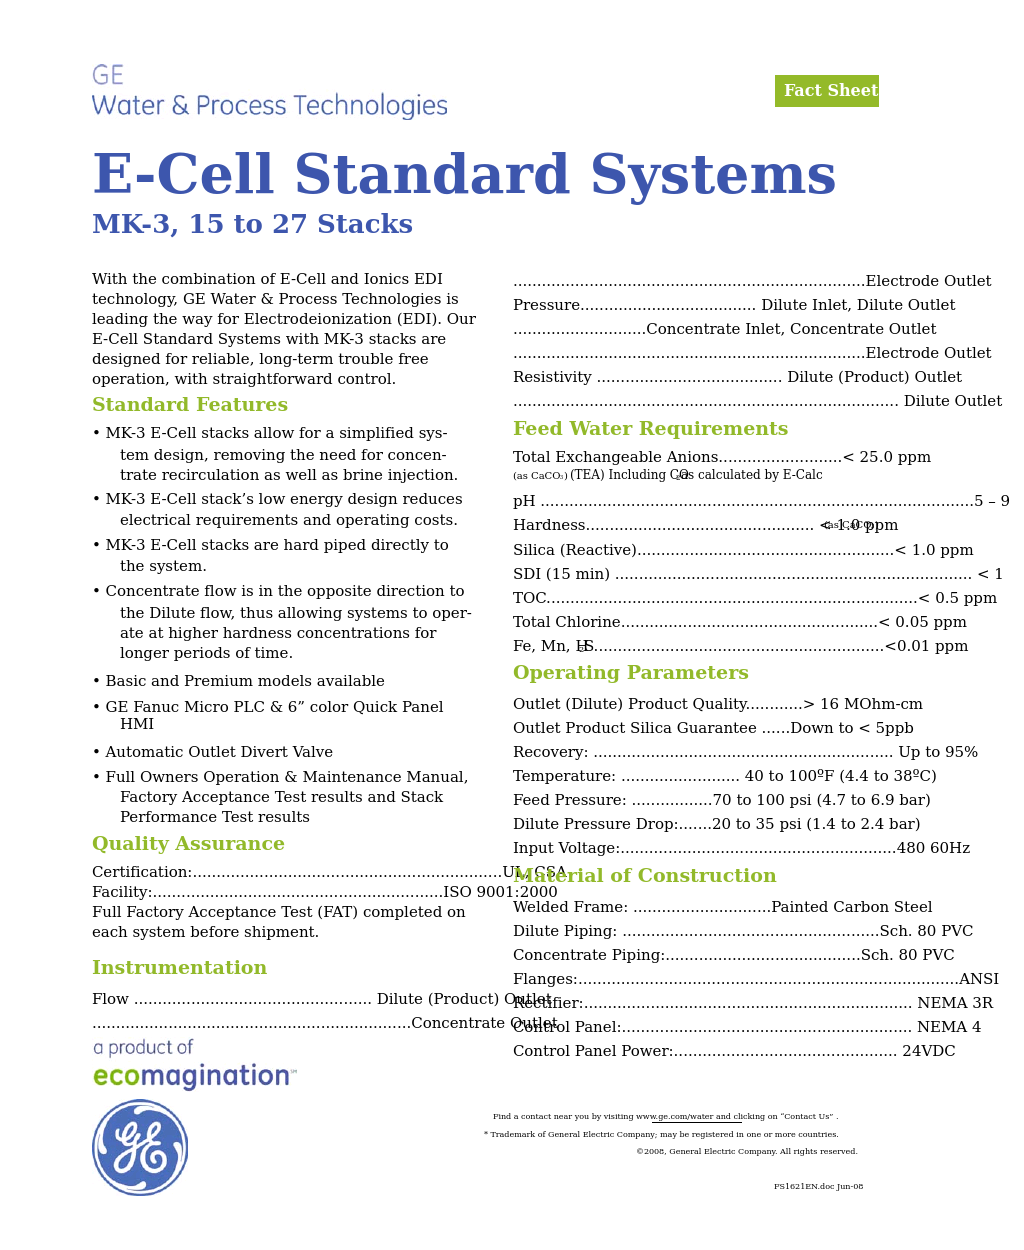 Electrodeionization (EDI) - E-Cell Standard Systems, MK-3, 15 to 27 Stacks